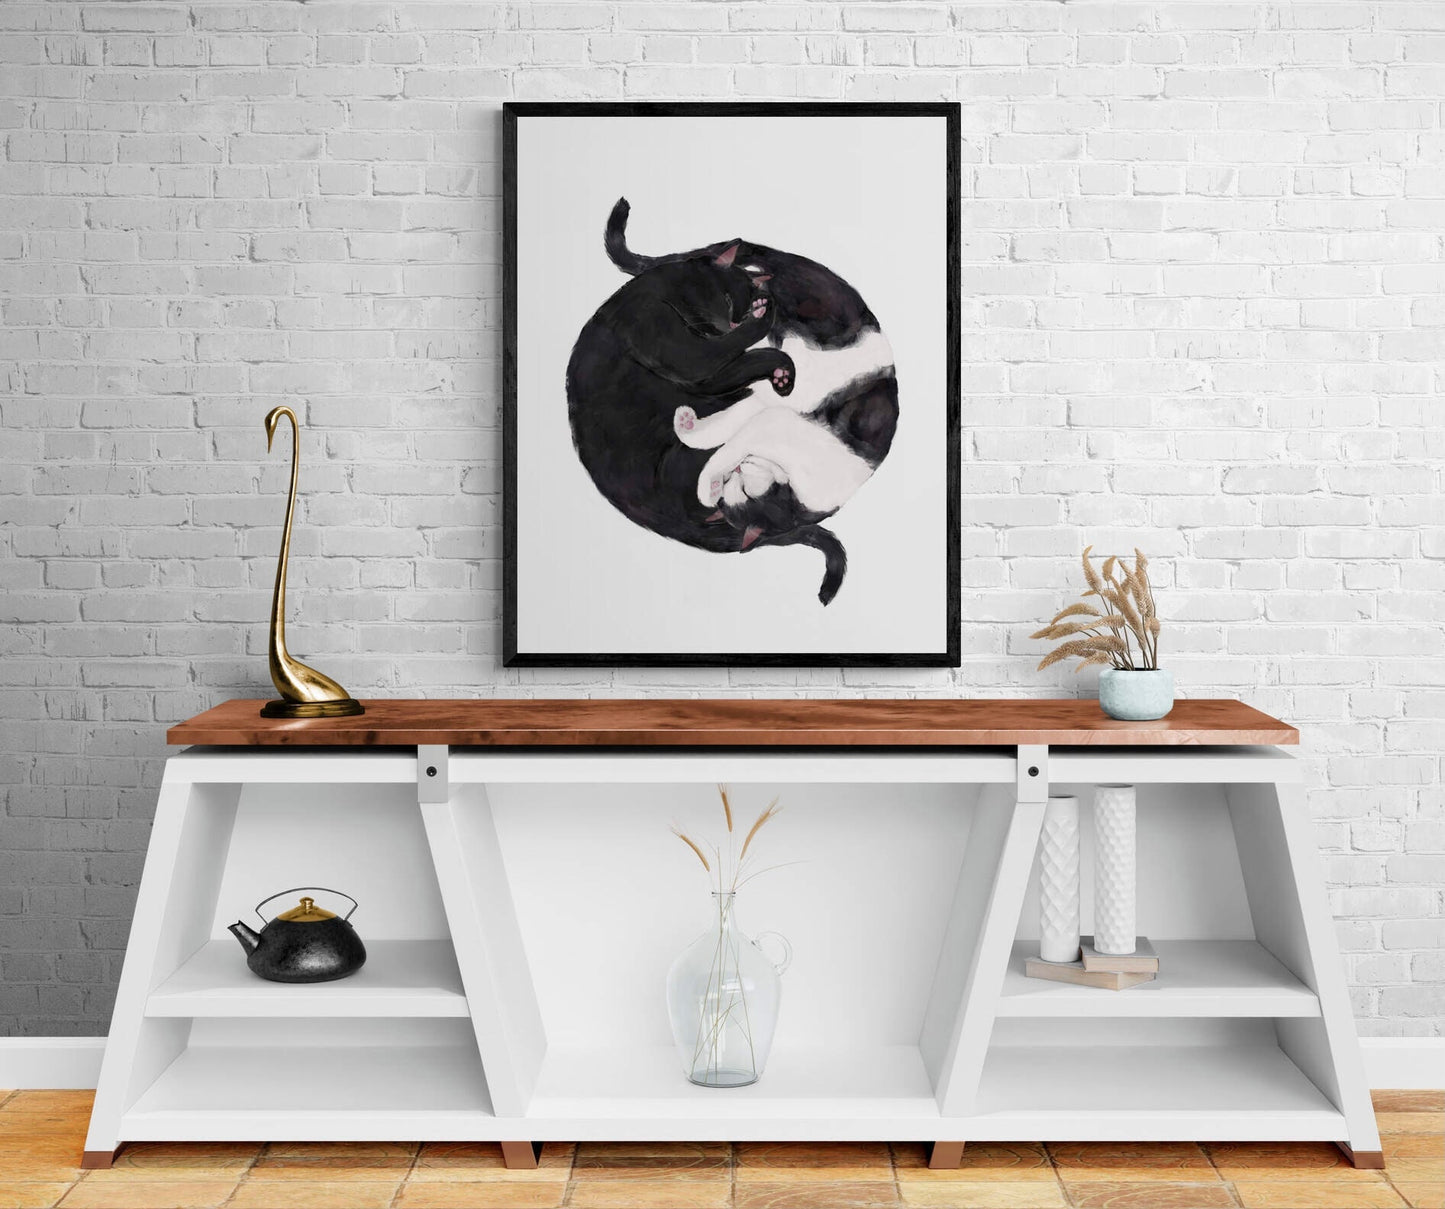 Customized Sleeping Black And Tuxedo Cat Print, Custom Cuddling White and Black Cat, Cat Illustration, Home Decor, Lazy Cat Painting